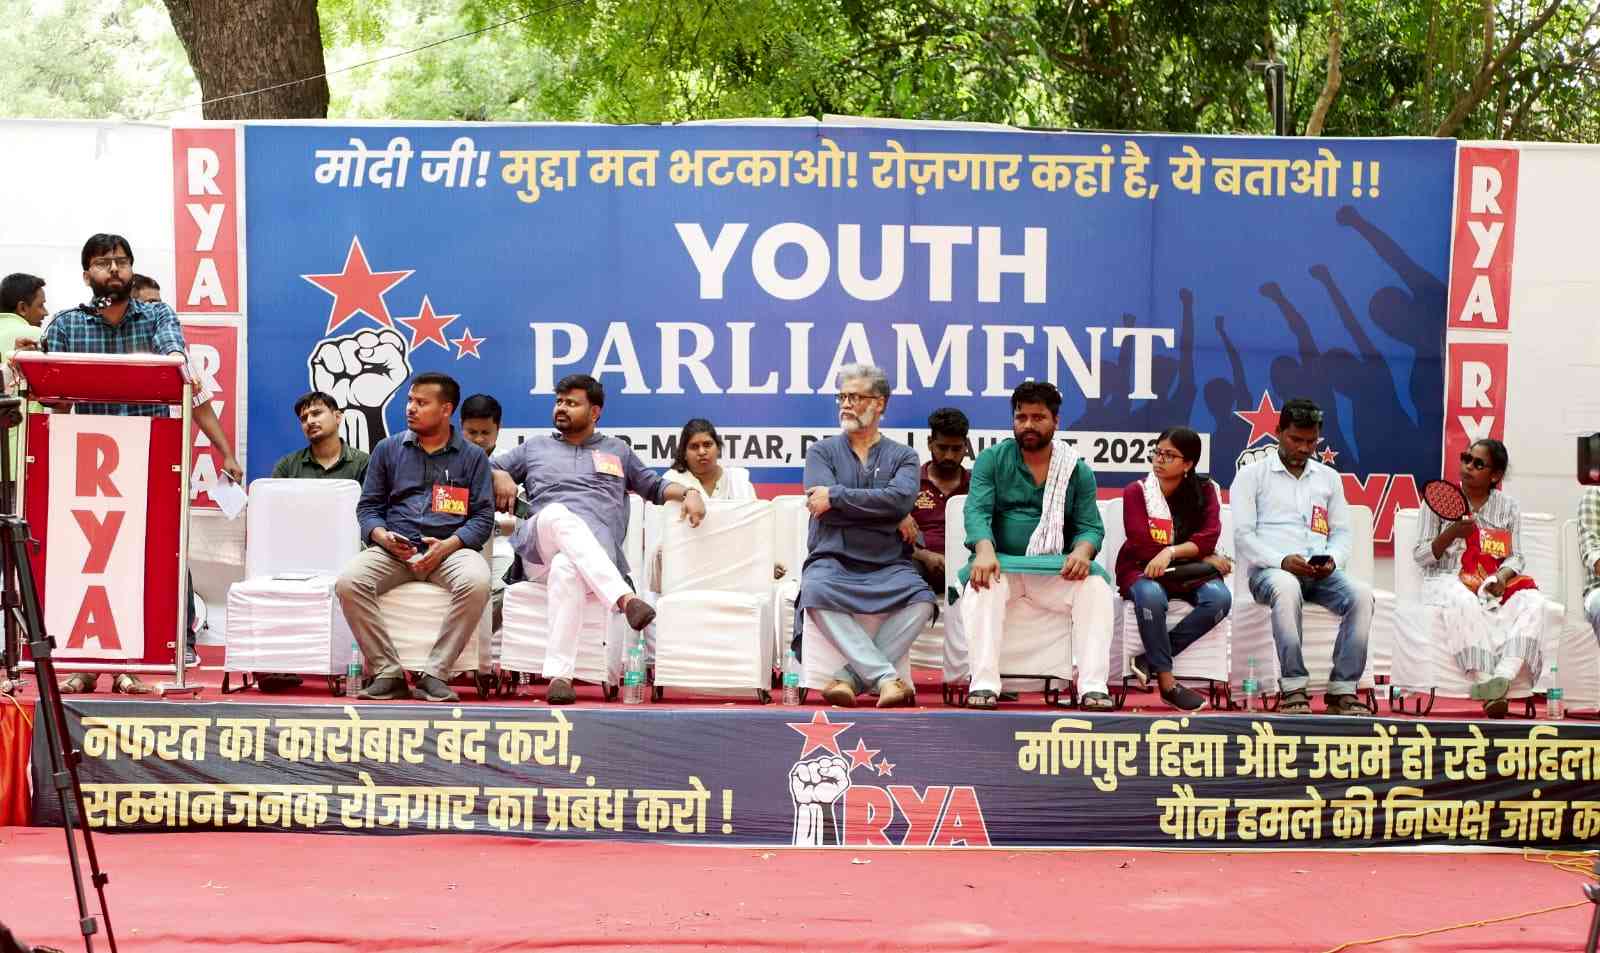 Youth Parliament in Delhi Demand ‘Jobs, Not Communal Mobs!